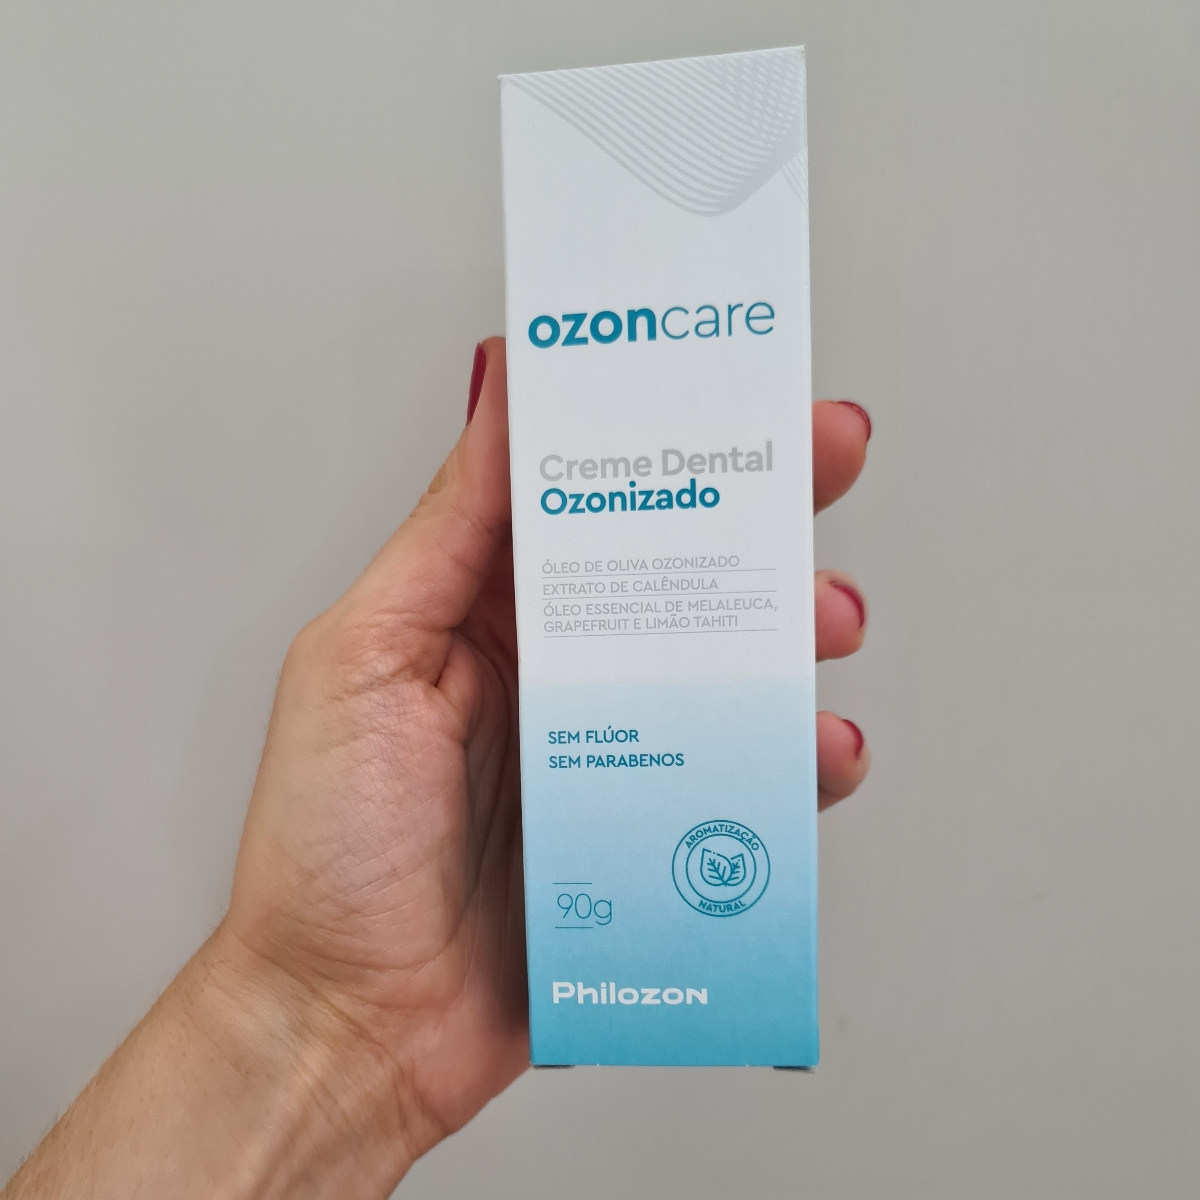 Ozoncare Creme Dental Ozonizado Reviews | abillion